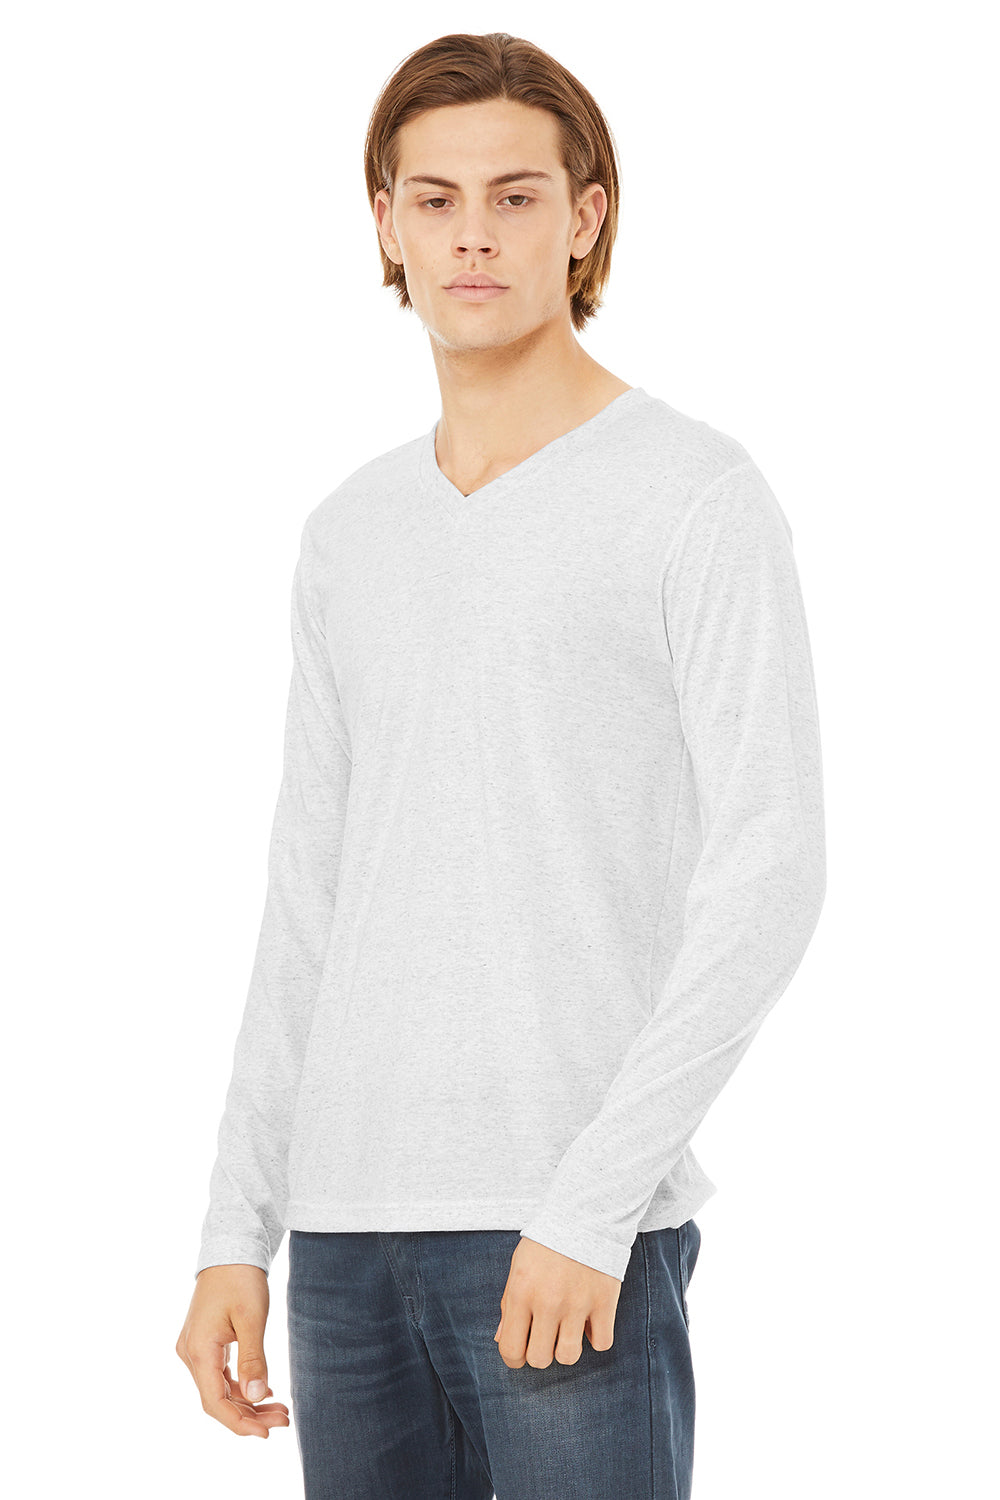 Bella + Canvas 3425 Mens Jersey Long Sleeve V-Neck T-Shirt White Fleck Model 3Q